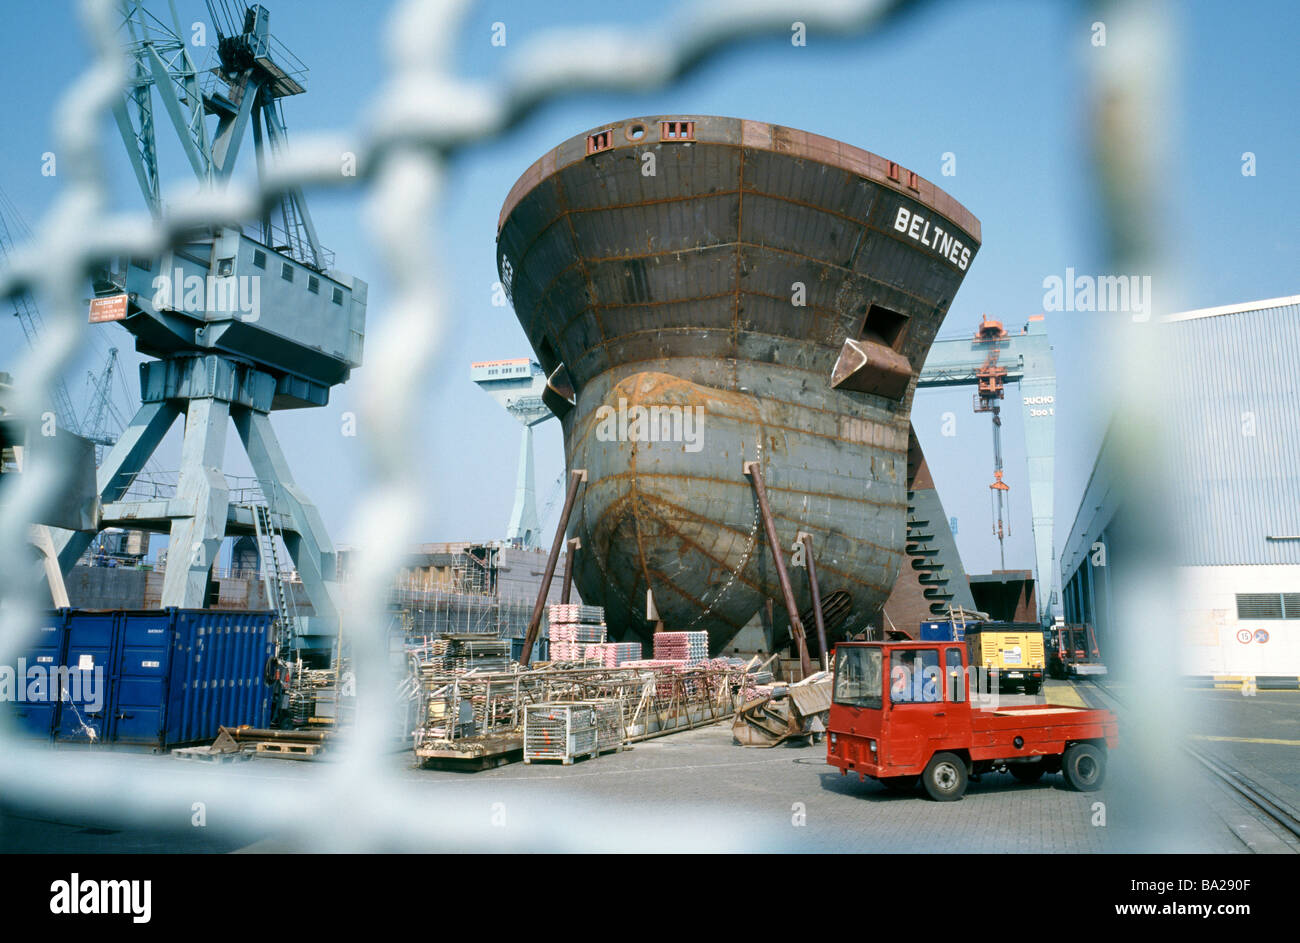 April 7, 2009 - JJ Sietas shipyard outside the German city of Hamburg. Stock Photo